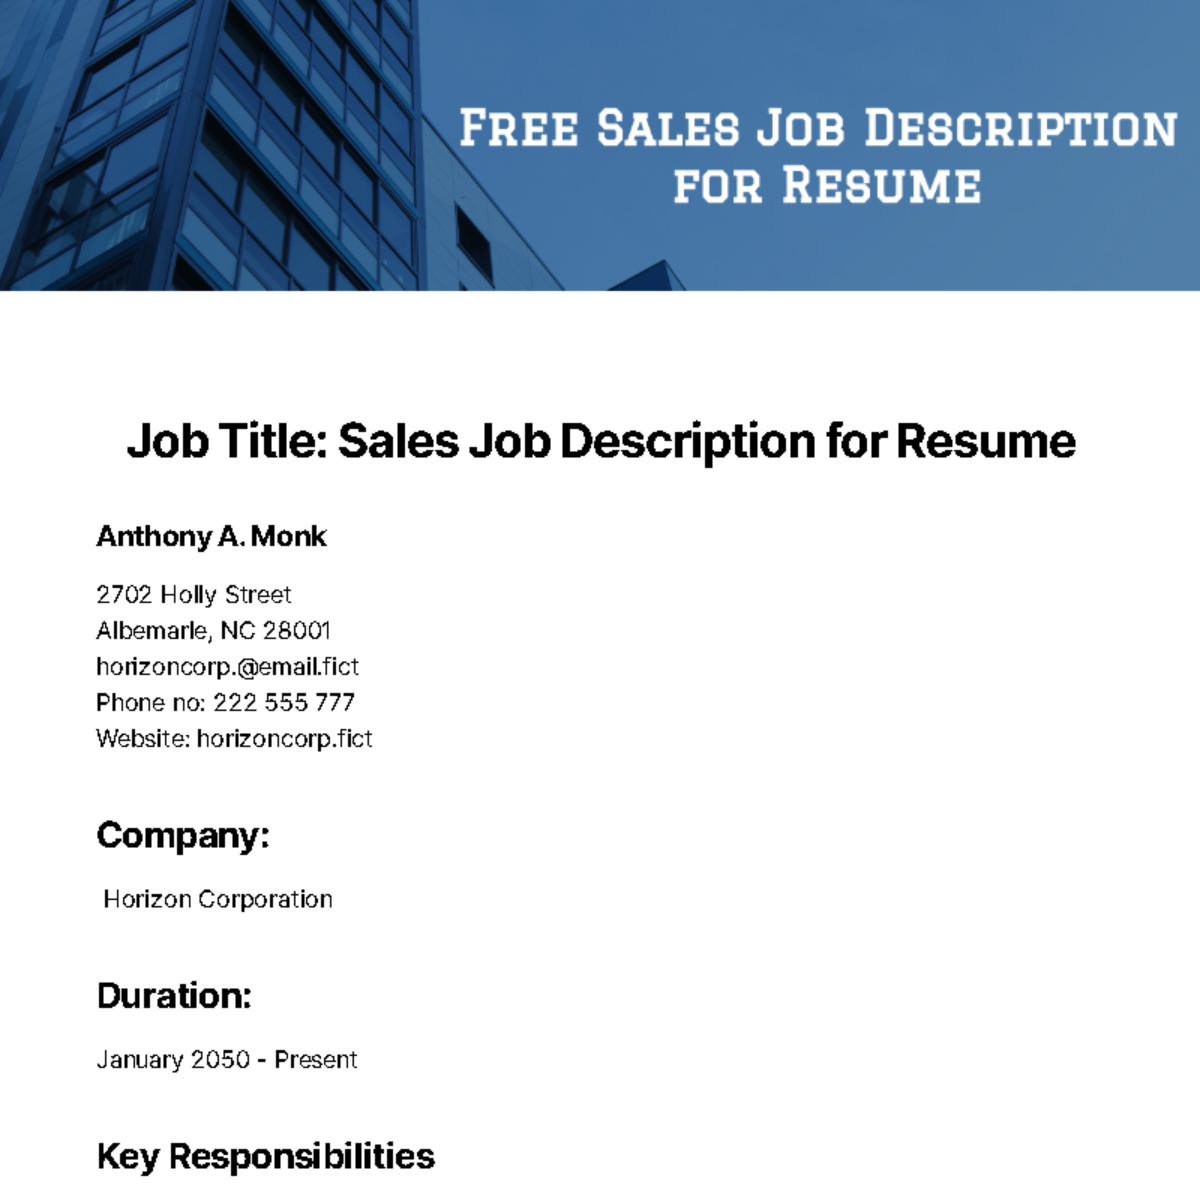 Free Sales Job Description for Resume Template